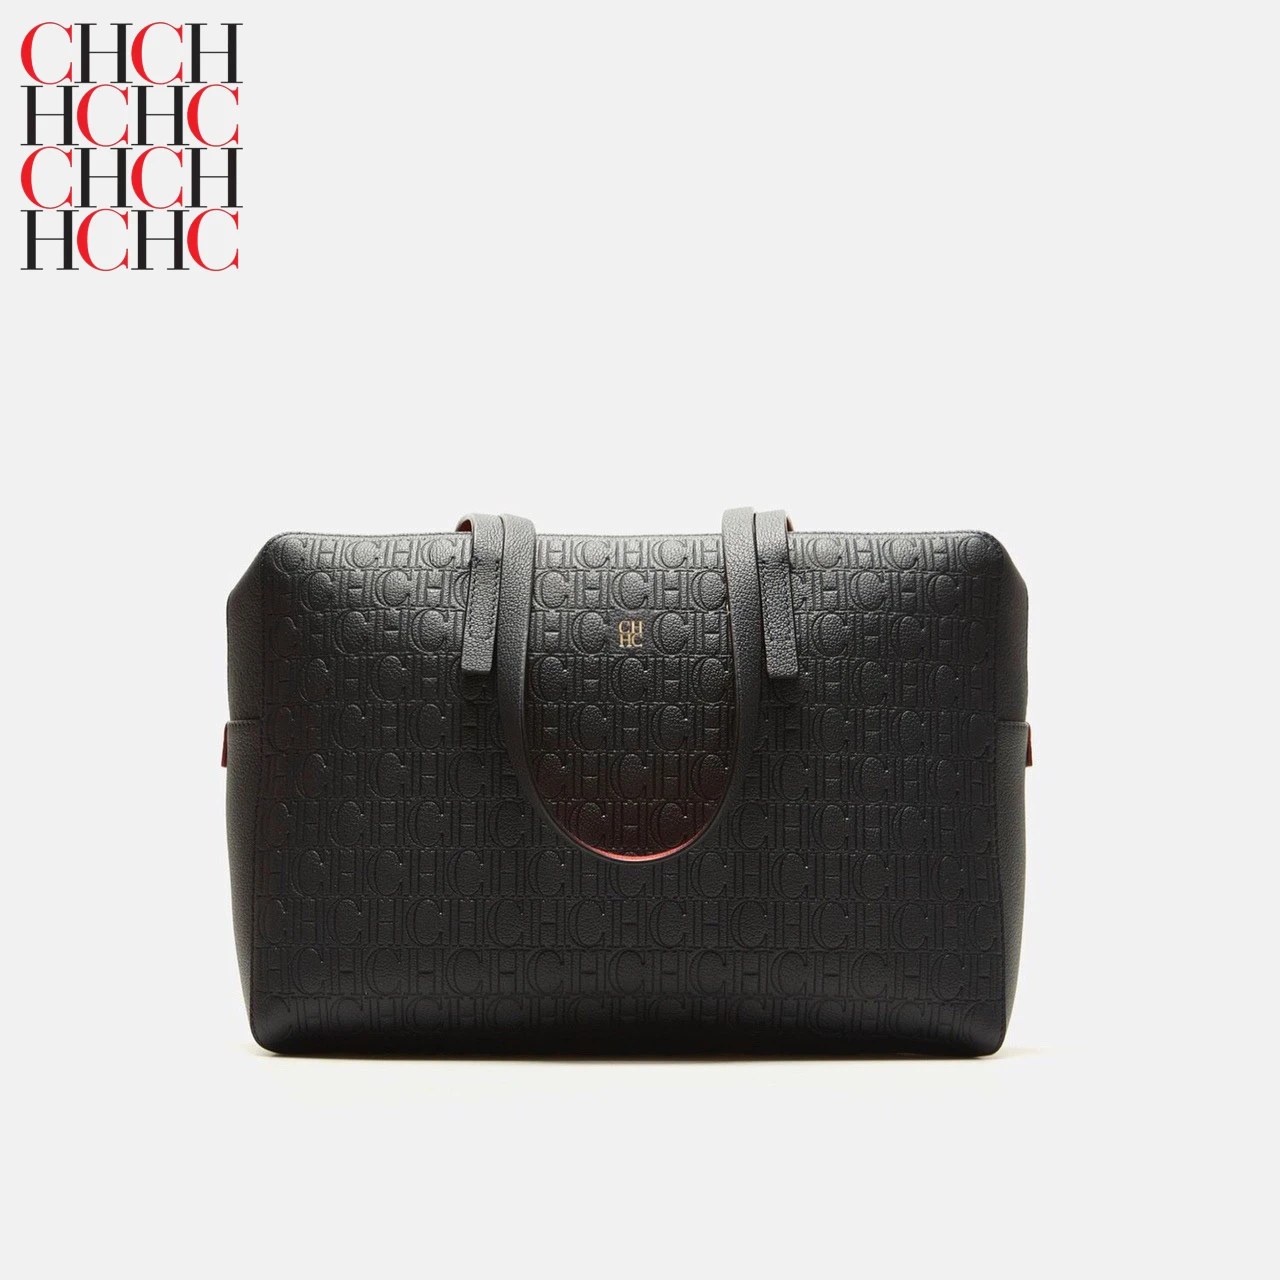 

100% Genuine Leather Unisex Handbags 2022 New Fashion Single Shoulder Bags Luxury Brand Designer Purses Gg Cc Bolsa CHCH HCHC